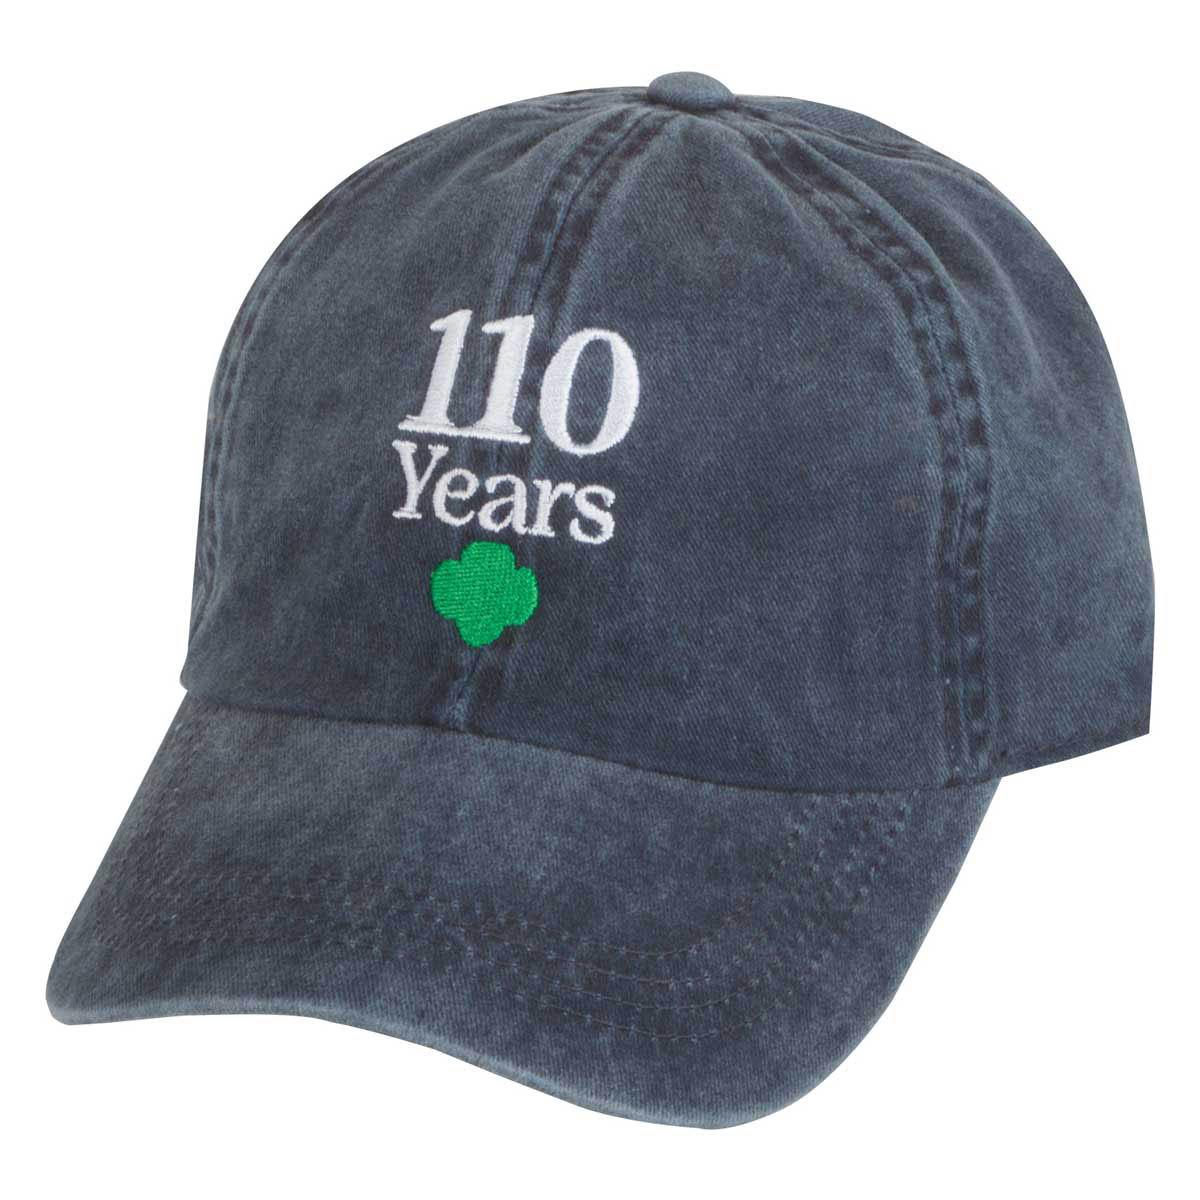 110th Anniversary Cap